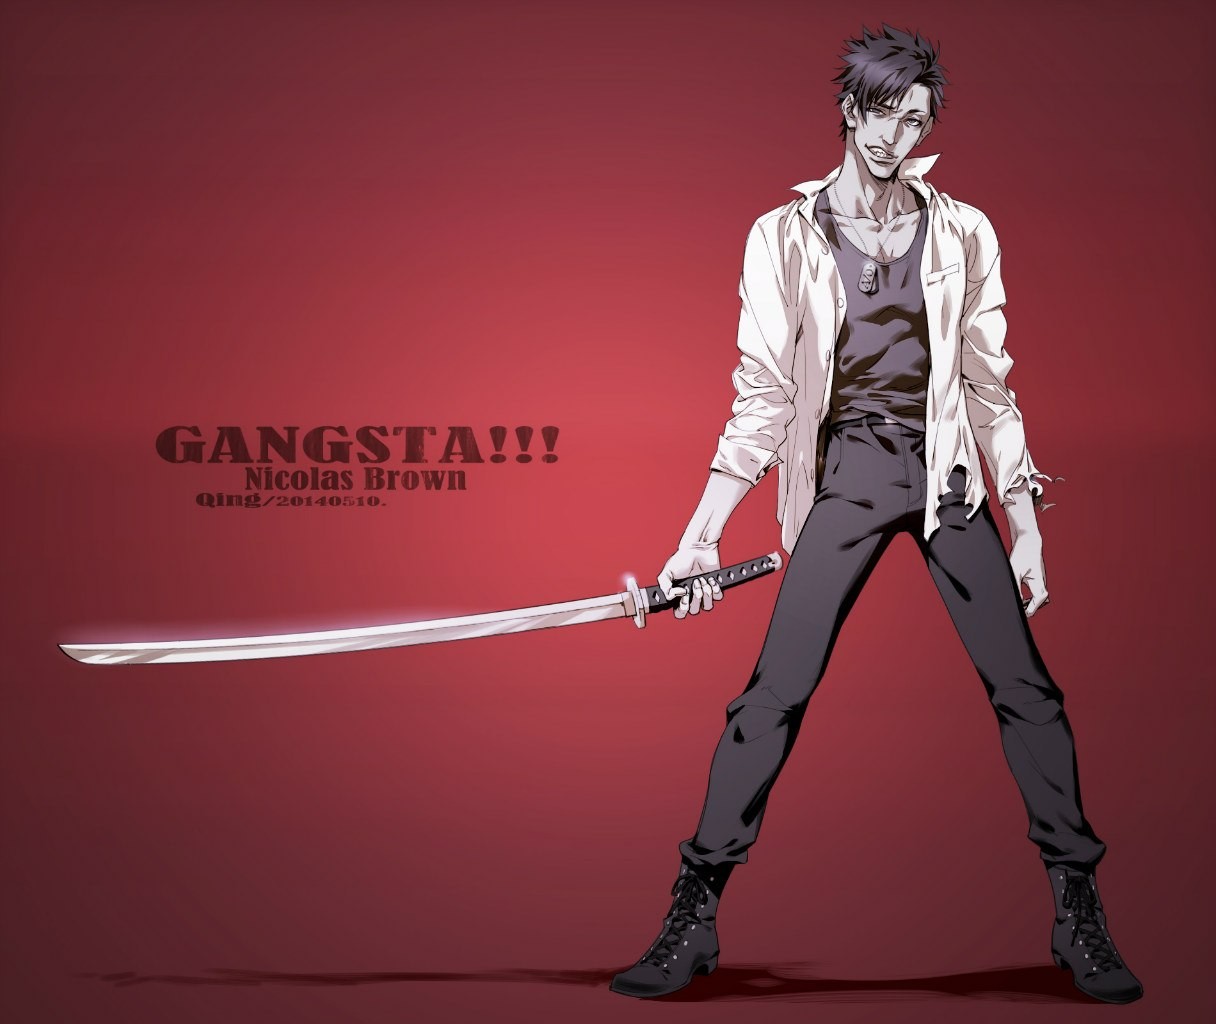 Anime 1216x1024 sword manga Gangsta Nicolas Brown red background weapon